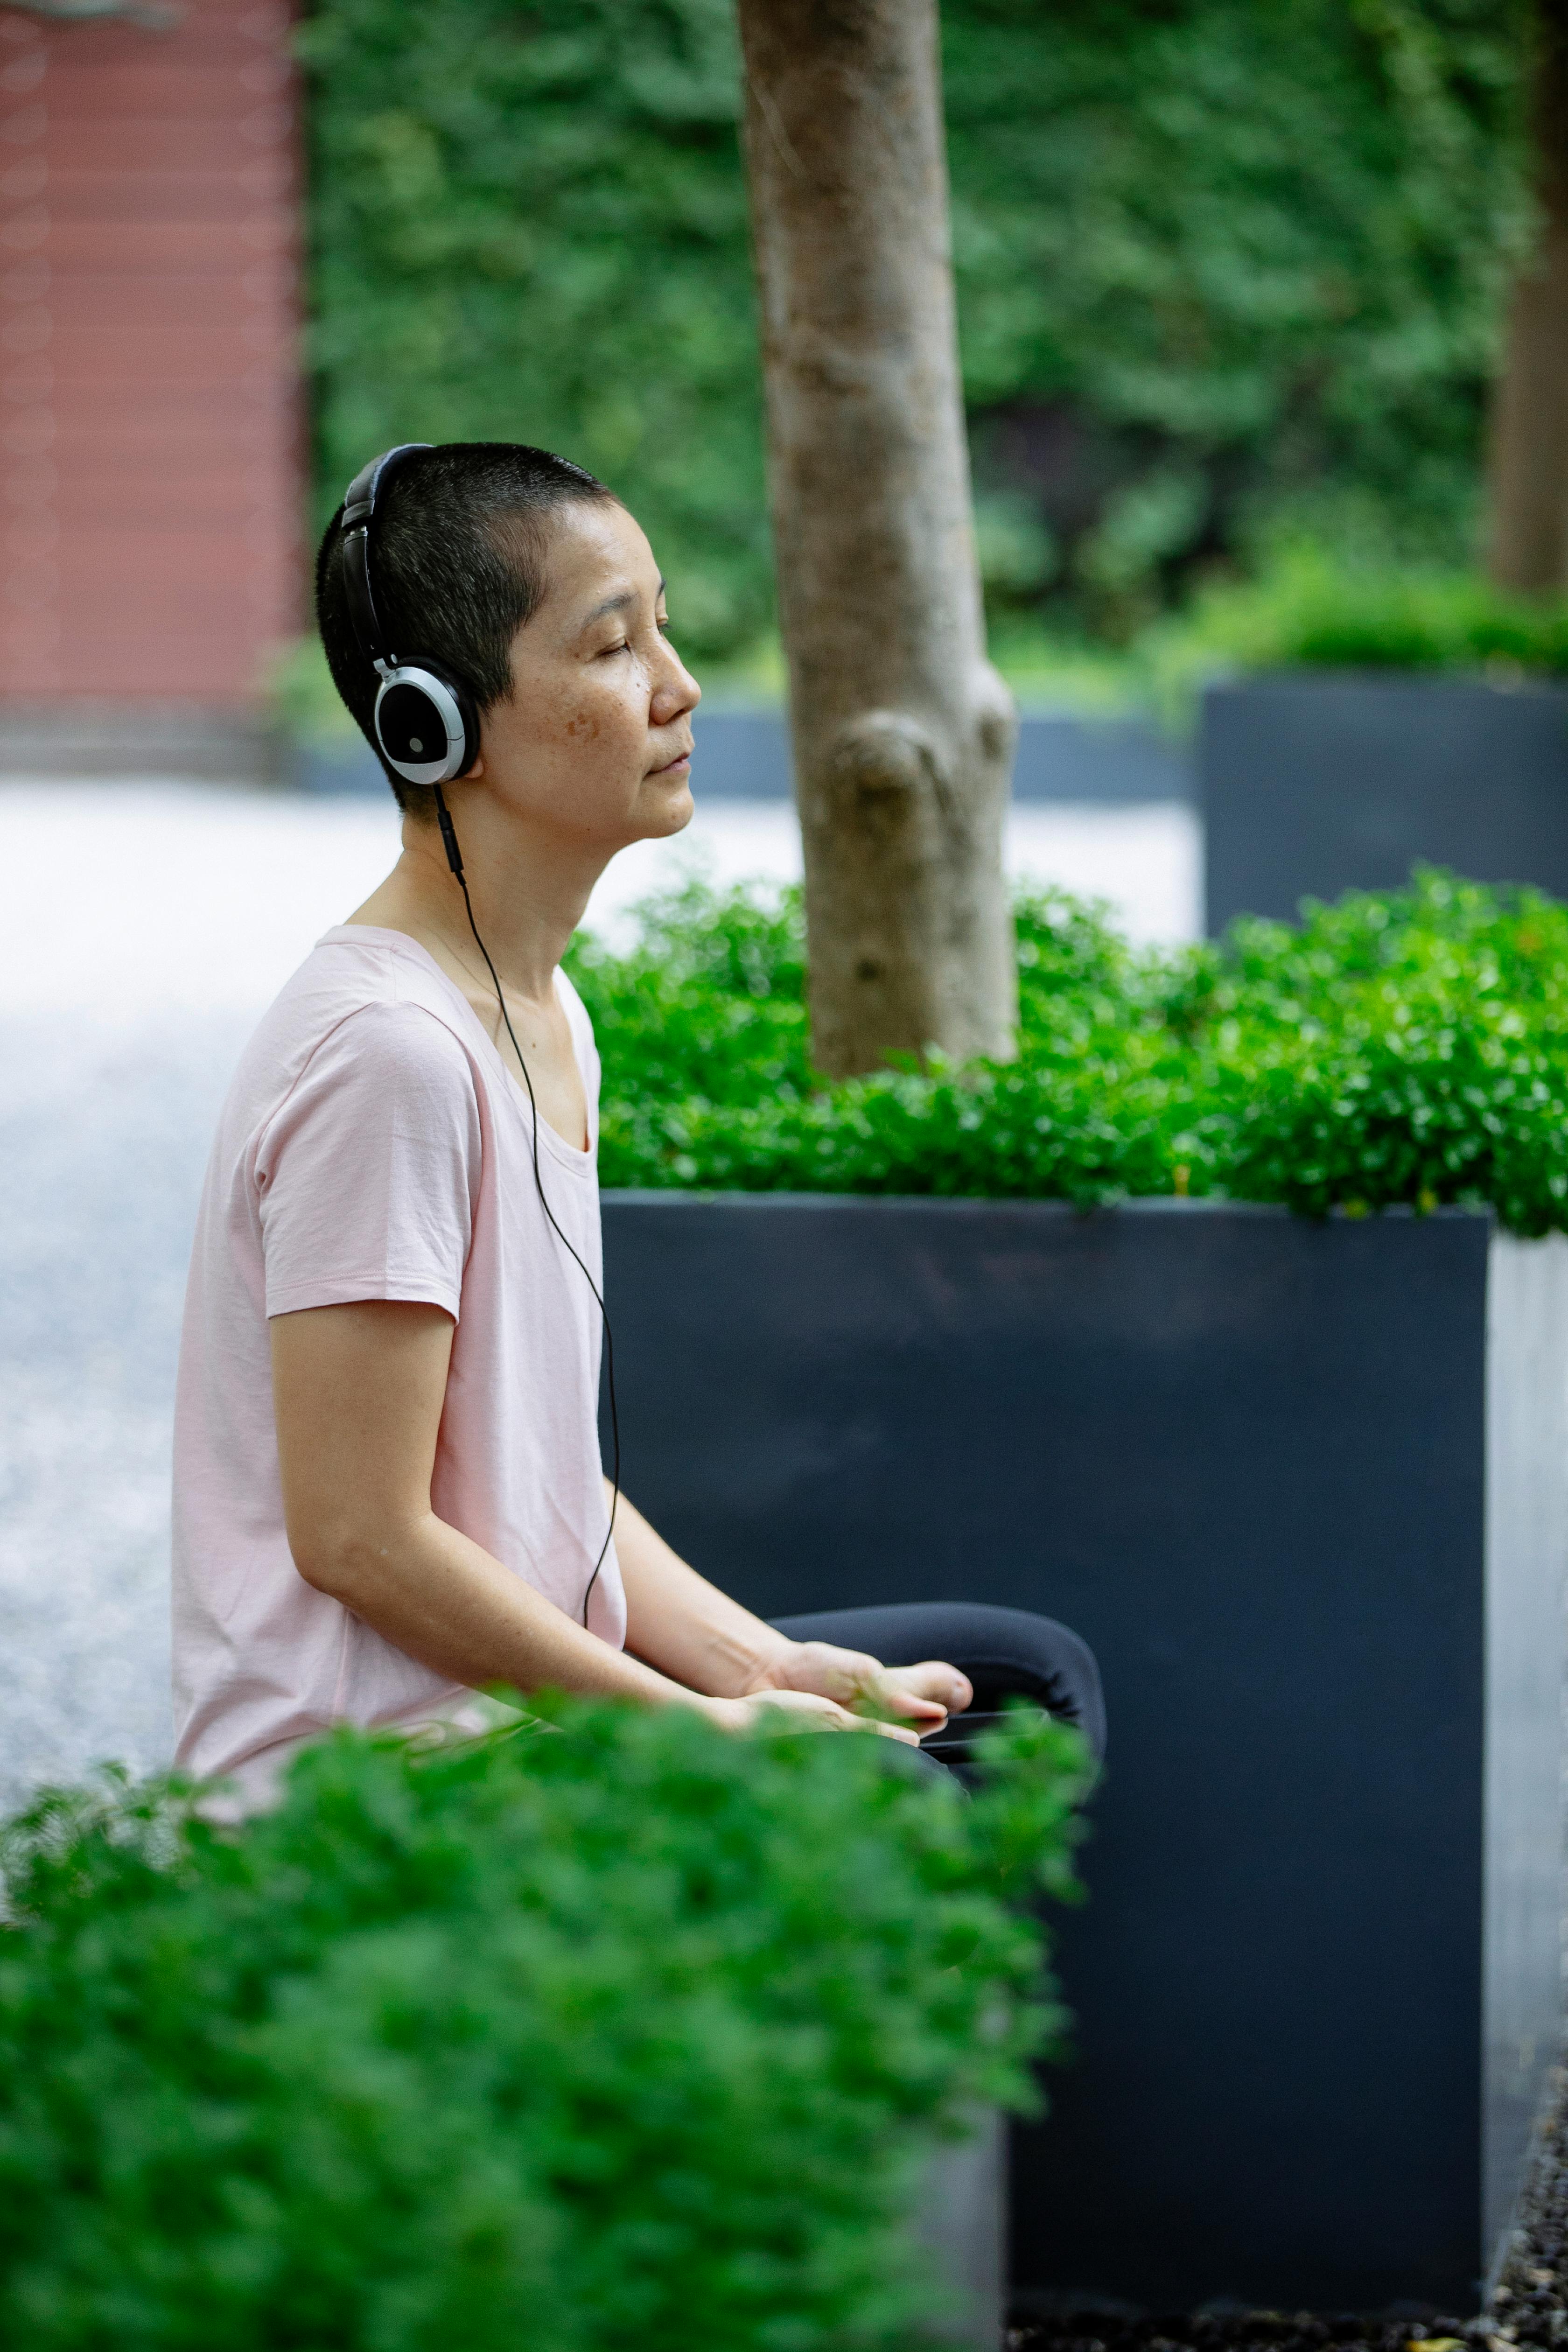 ethnic female on bench in headphones in park